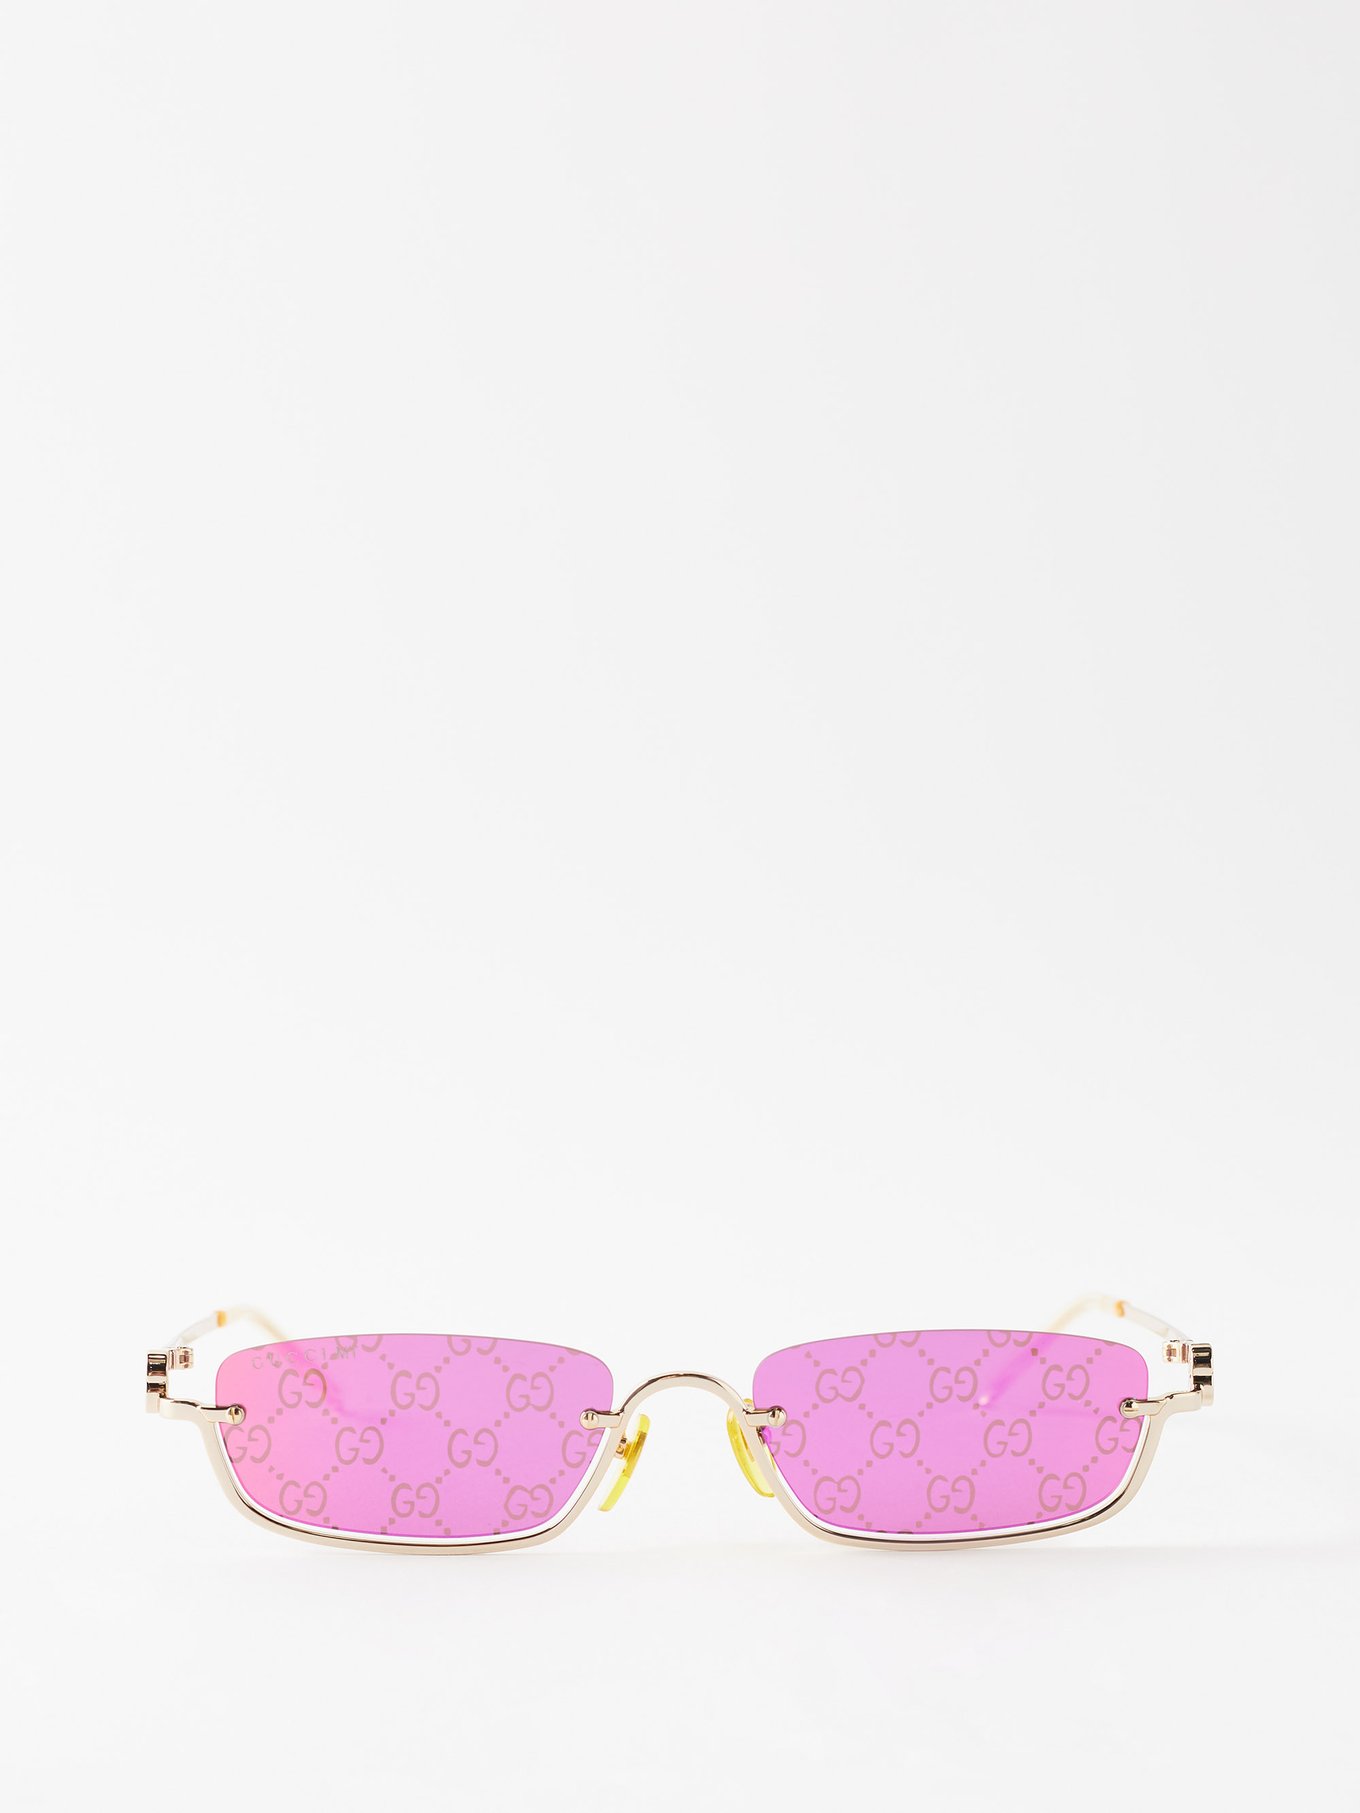 Bottega Veneta Rectangle Square Sunglasses in Lavender